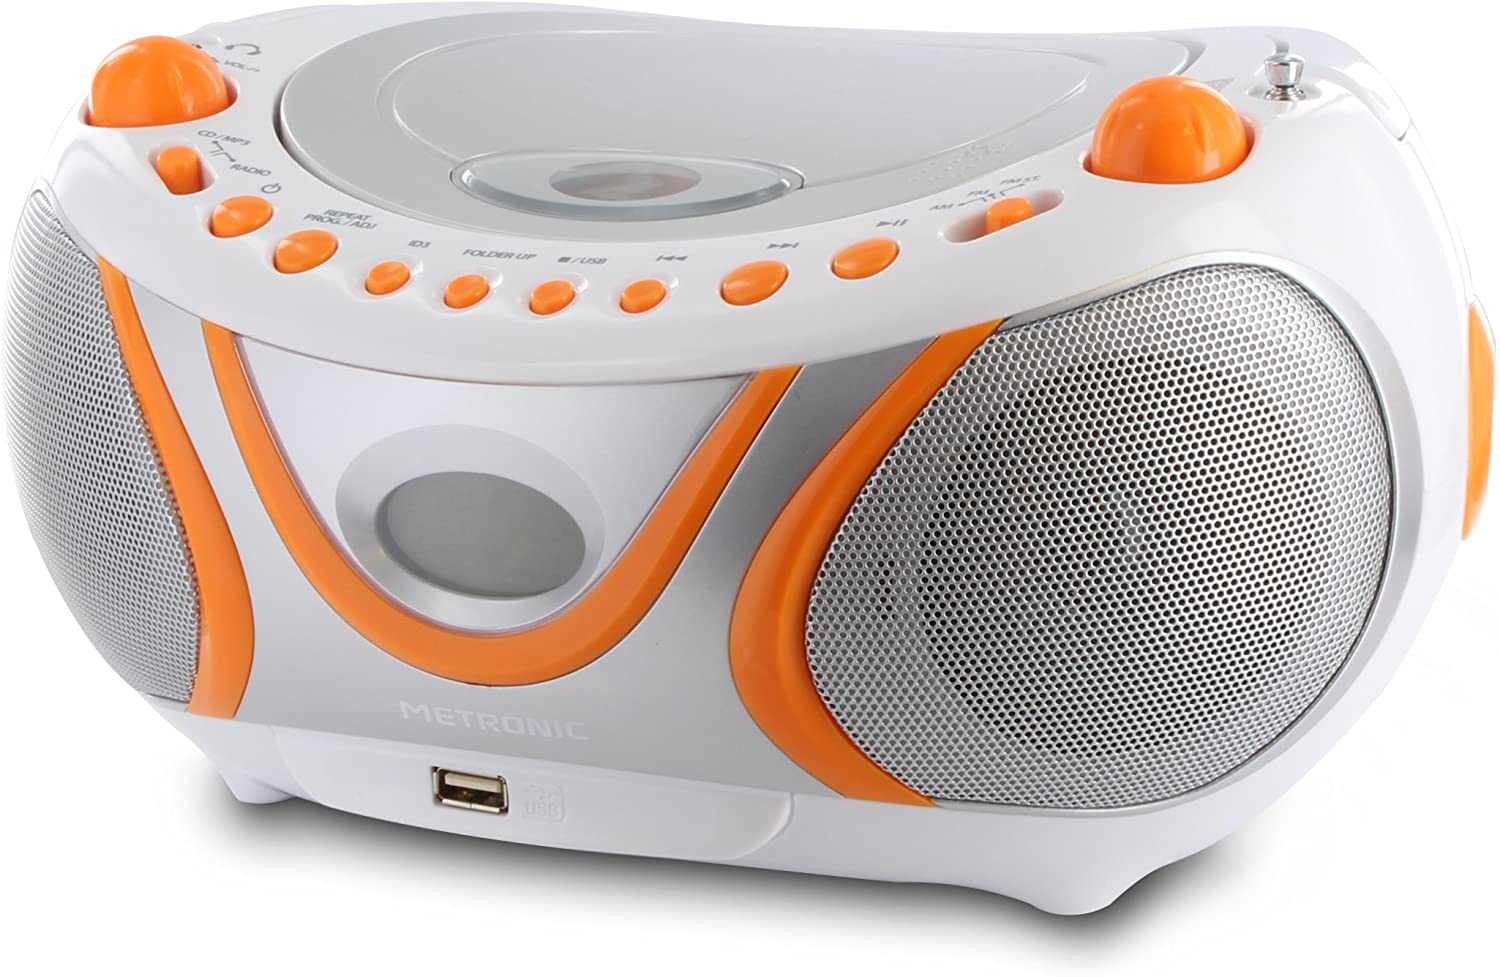 mini chaine hifi Radio Lecteur CD MP3 USB orange blanc gris